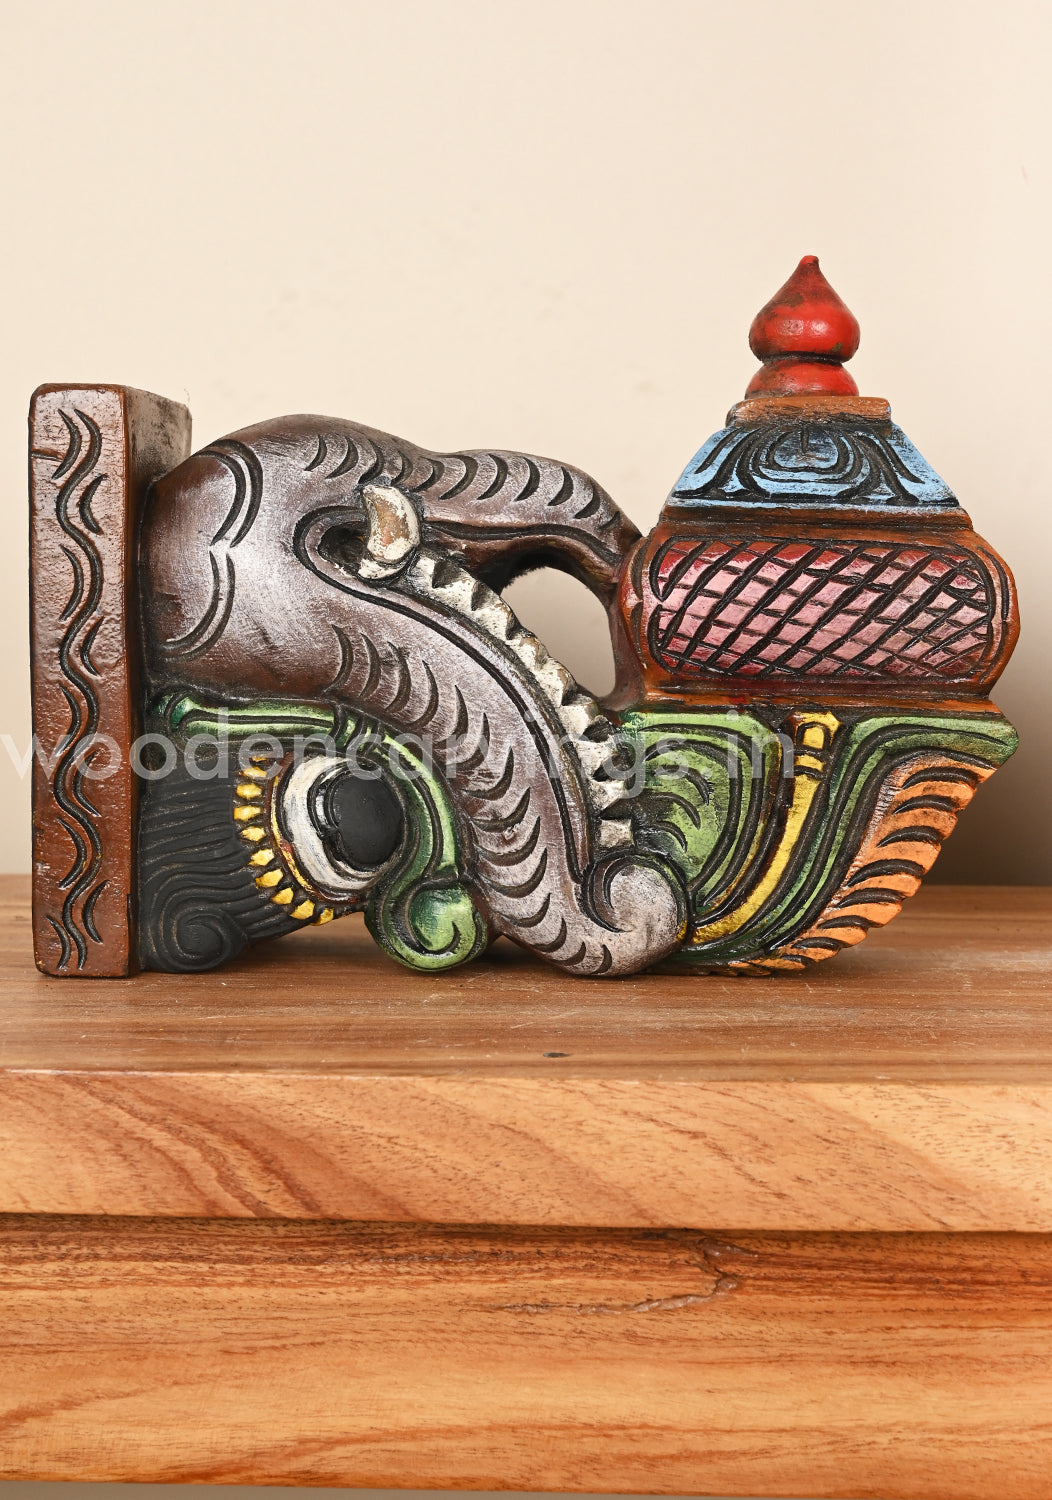 Door Decor Ancient Animal Yaazhi Bodhil Wooden Brackets 10"